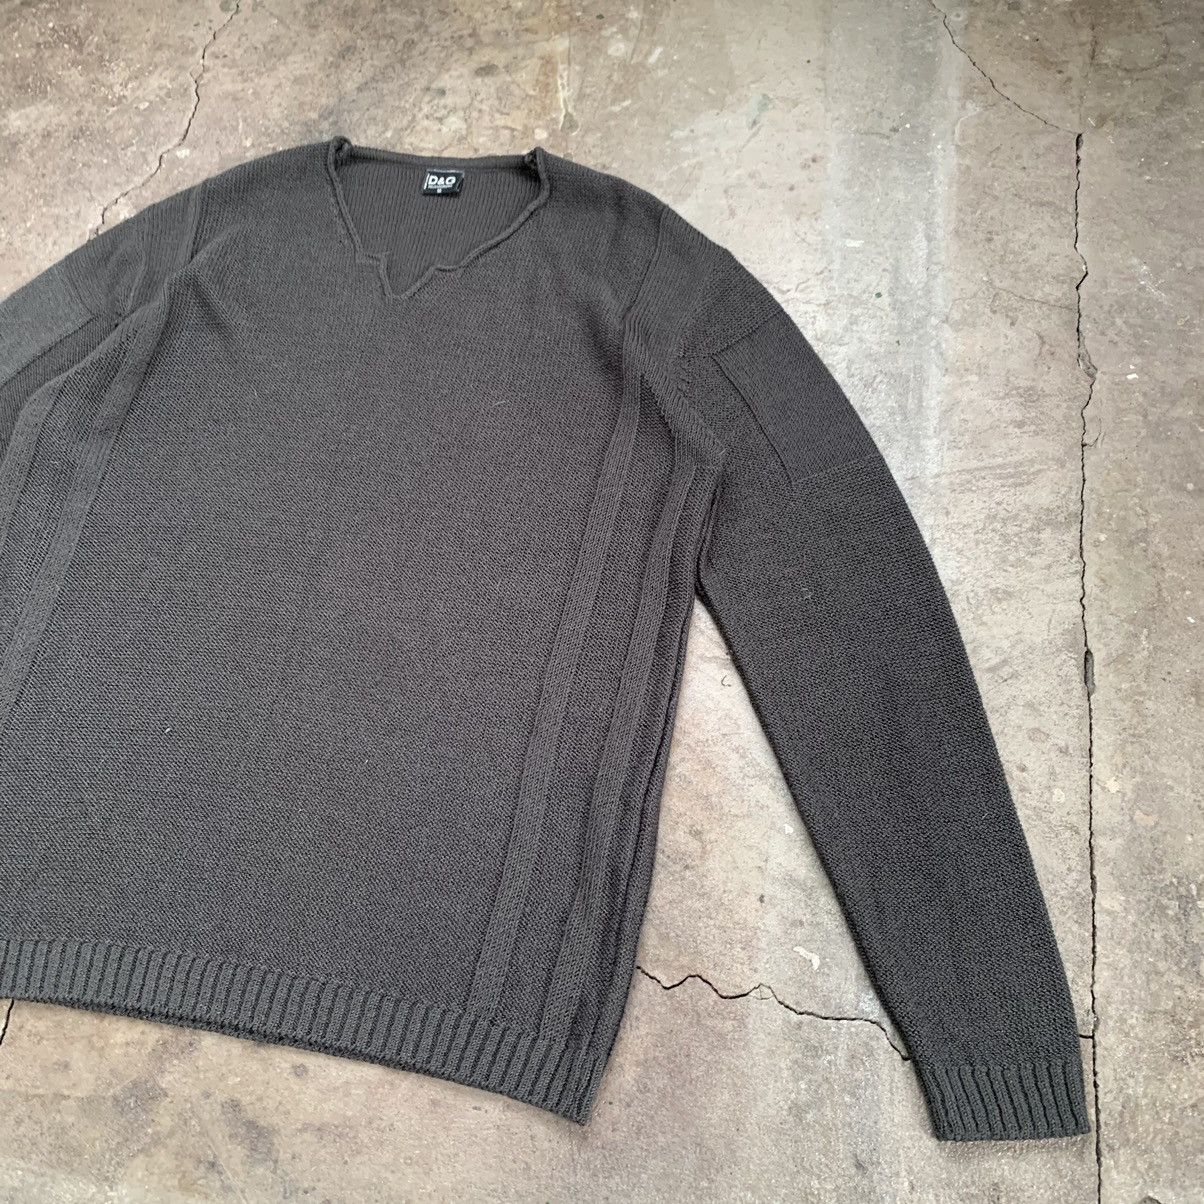 Vintage Dolce and gabbana vintage mesh sweater Size US M / EU 48-50 / 2 - 6 Thumbnail